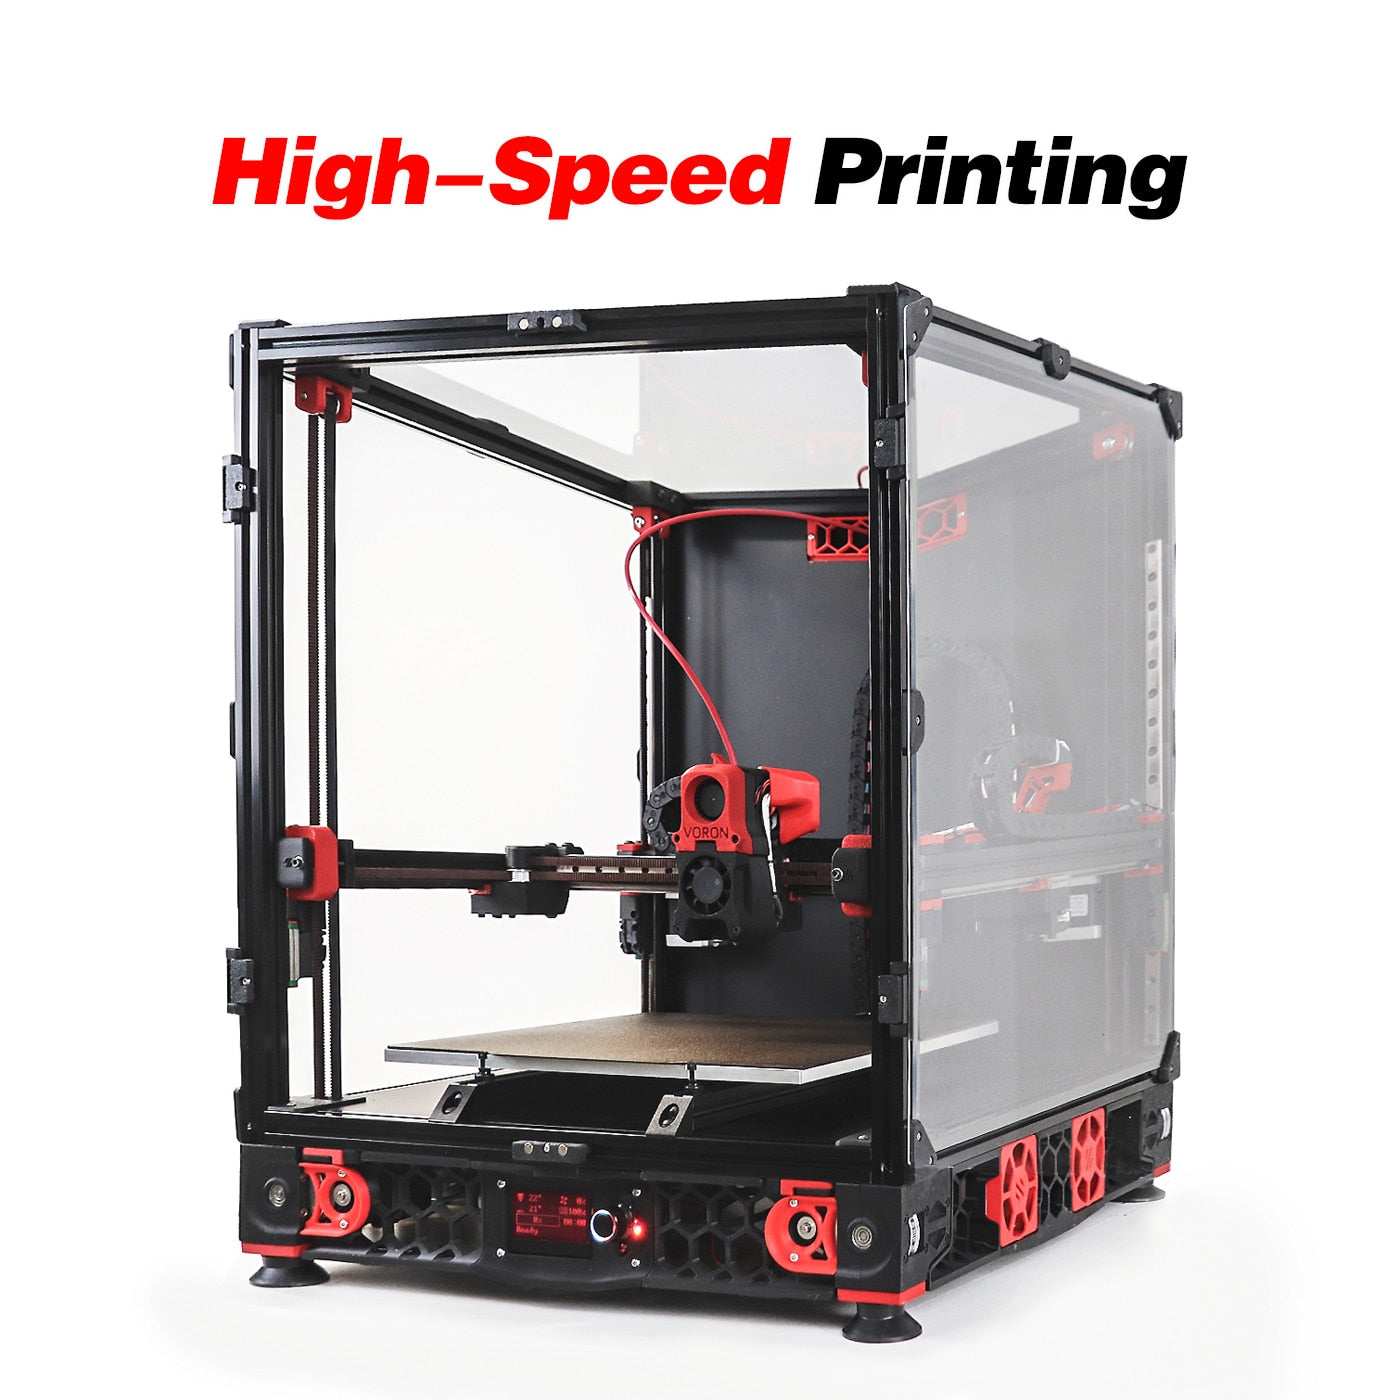 Voron V2.4 3D Printer Kit - R2 CoreXY with Stealthburner Extruder DIY Impresor 3D Printer Full Kits Included ABS Printed Parts